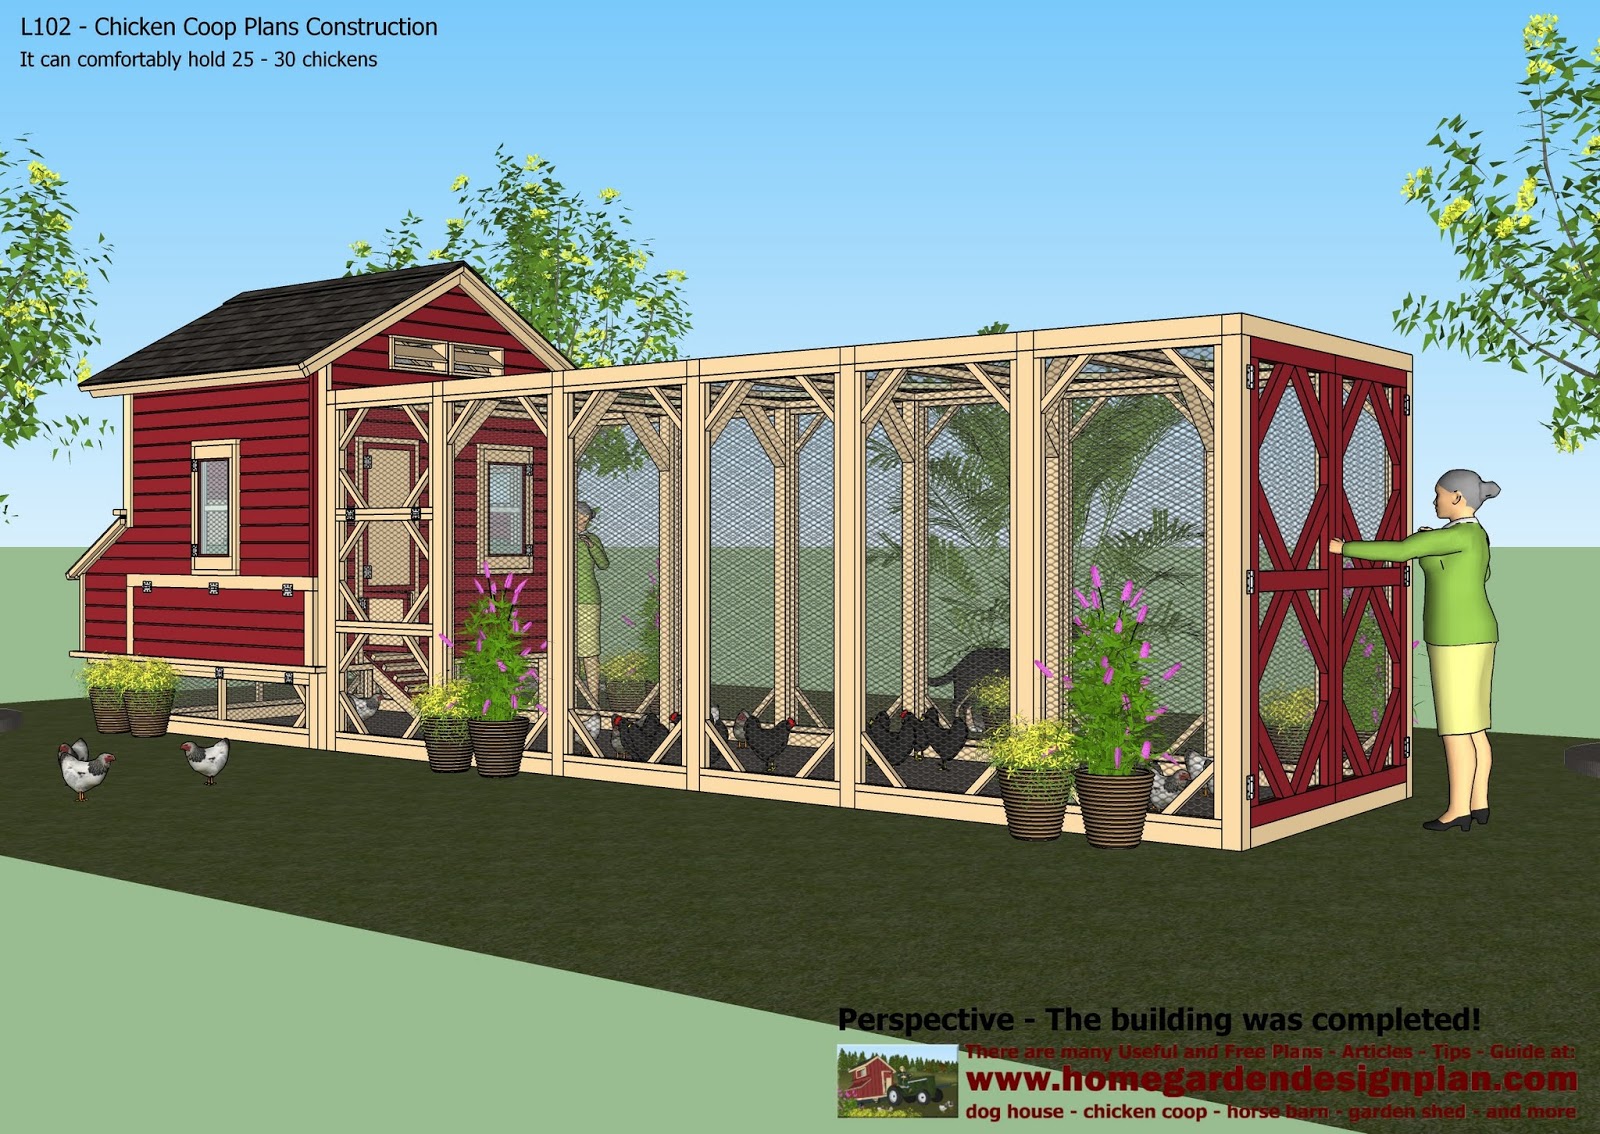 Chicken Coop Plans Construction - Chicken Coop Design - How To Build